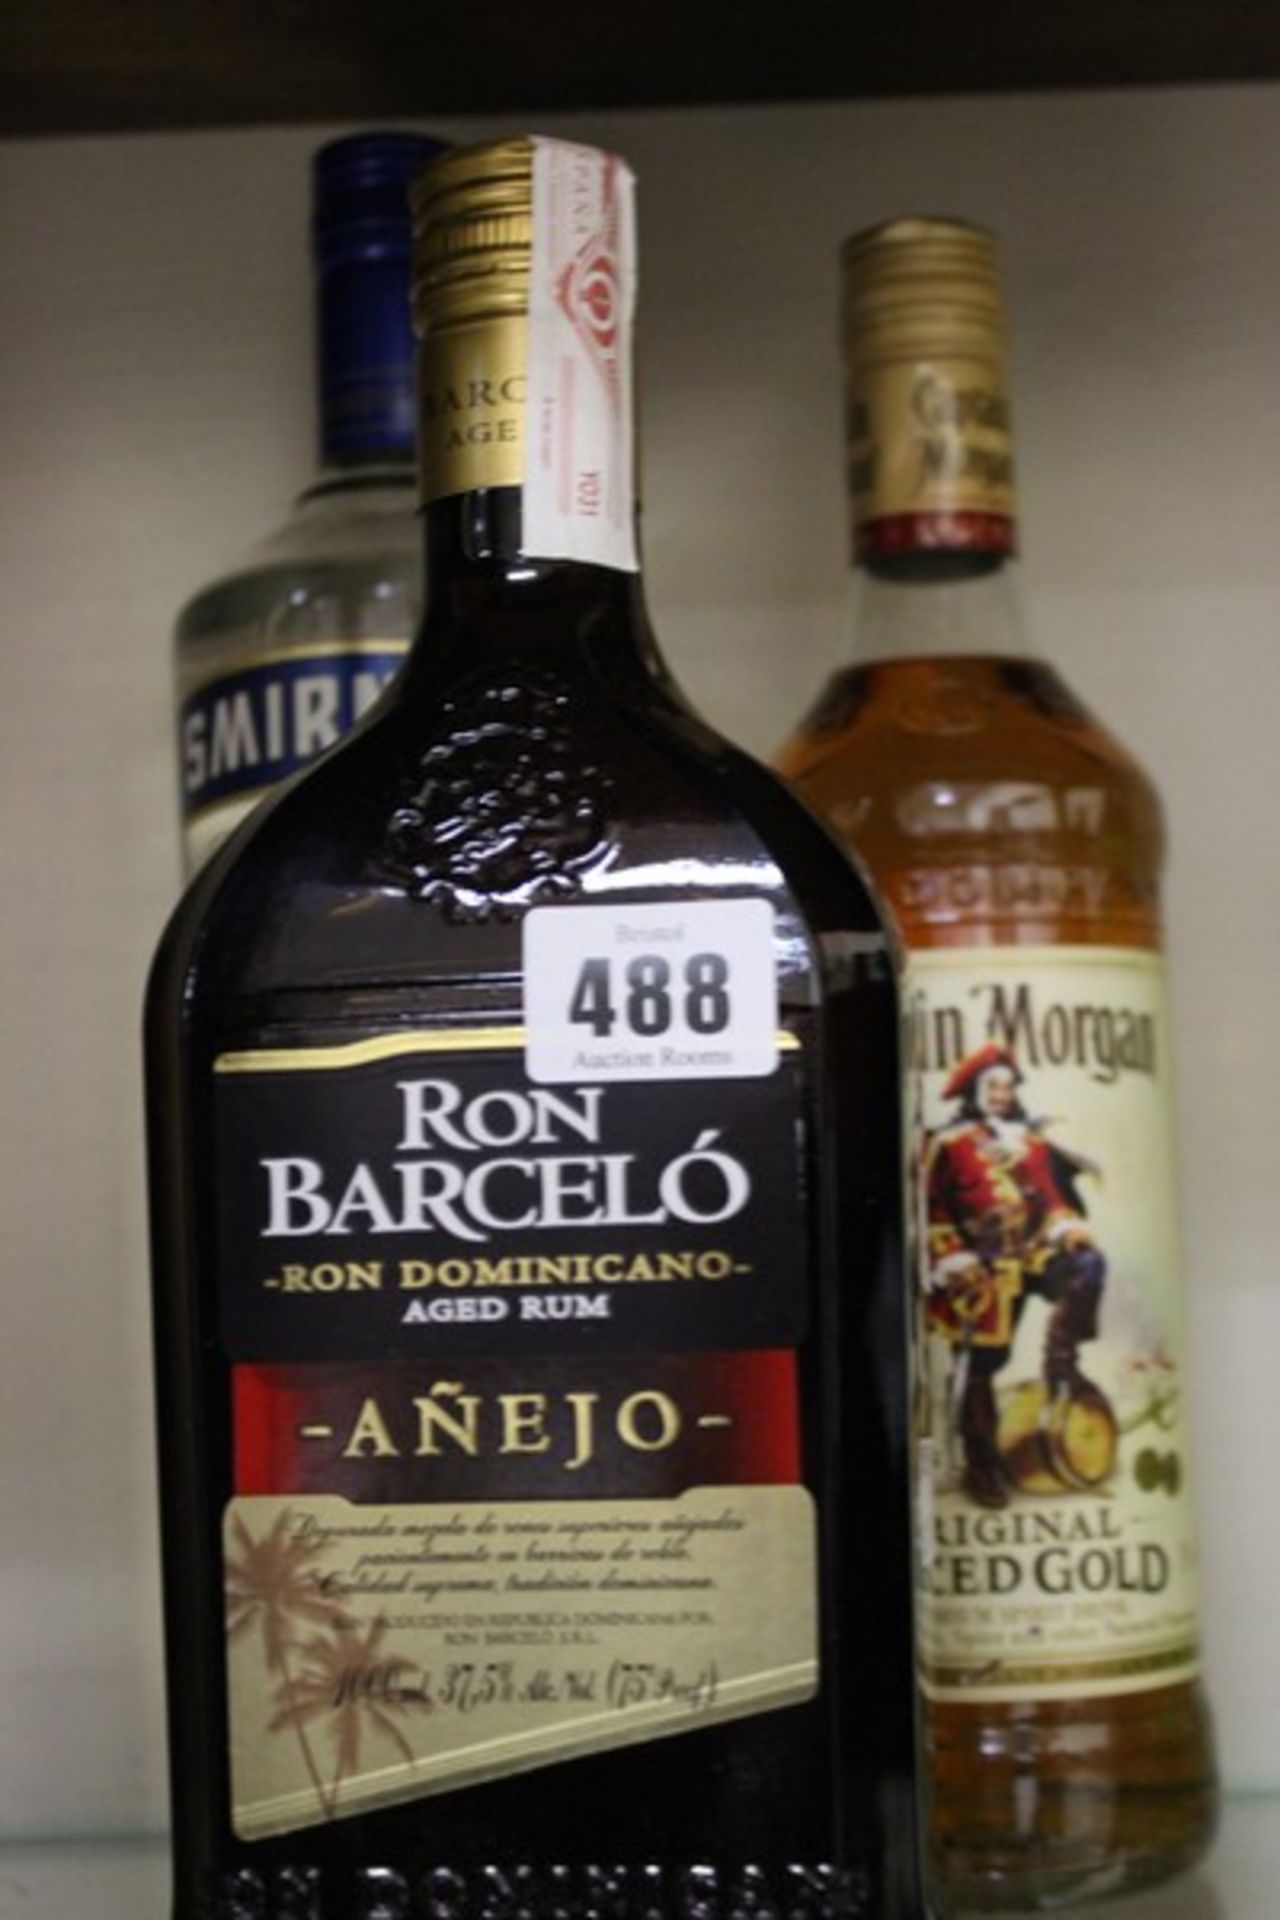 Ron Barcelo Anejo rum (1ltr), Captain Morgan Original Spiced Gold rum (700ml) and Smirnoff Triple